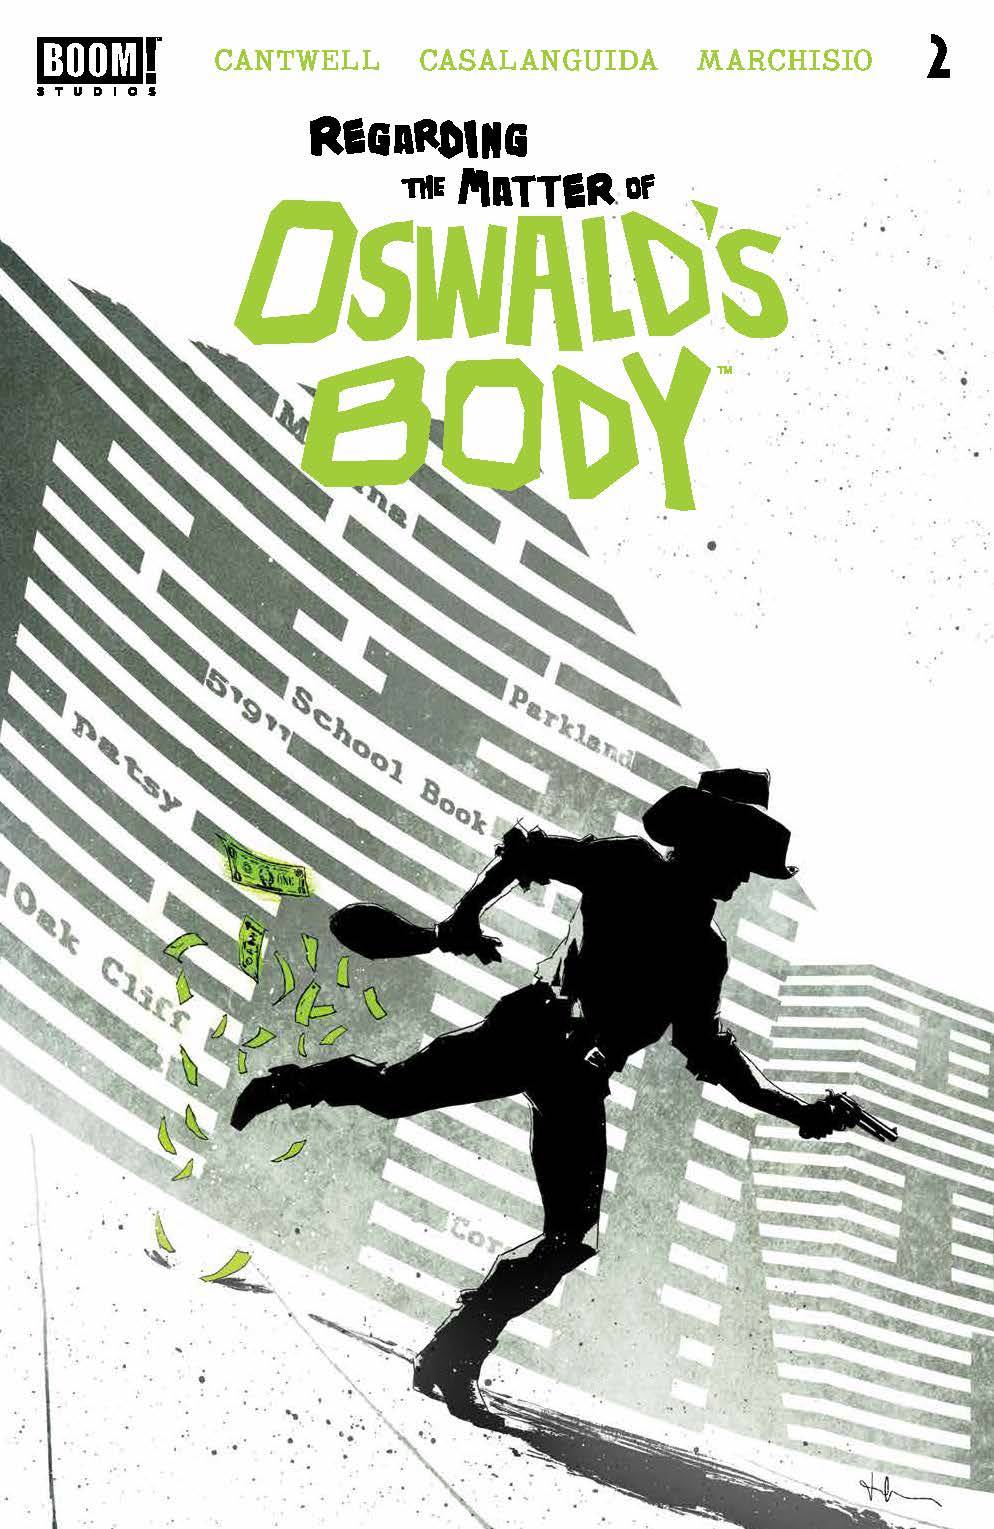 Oswald body 2 body lyrics